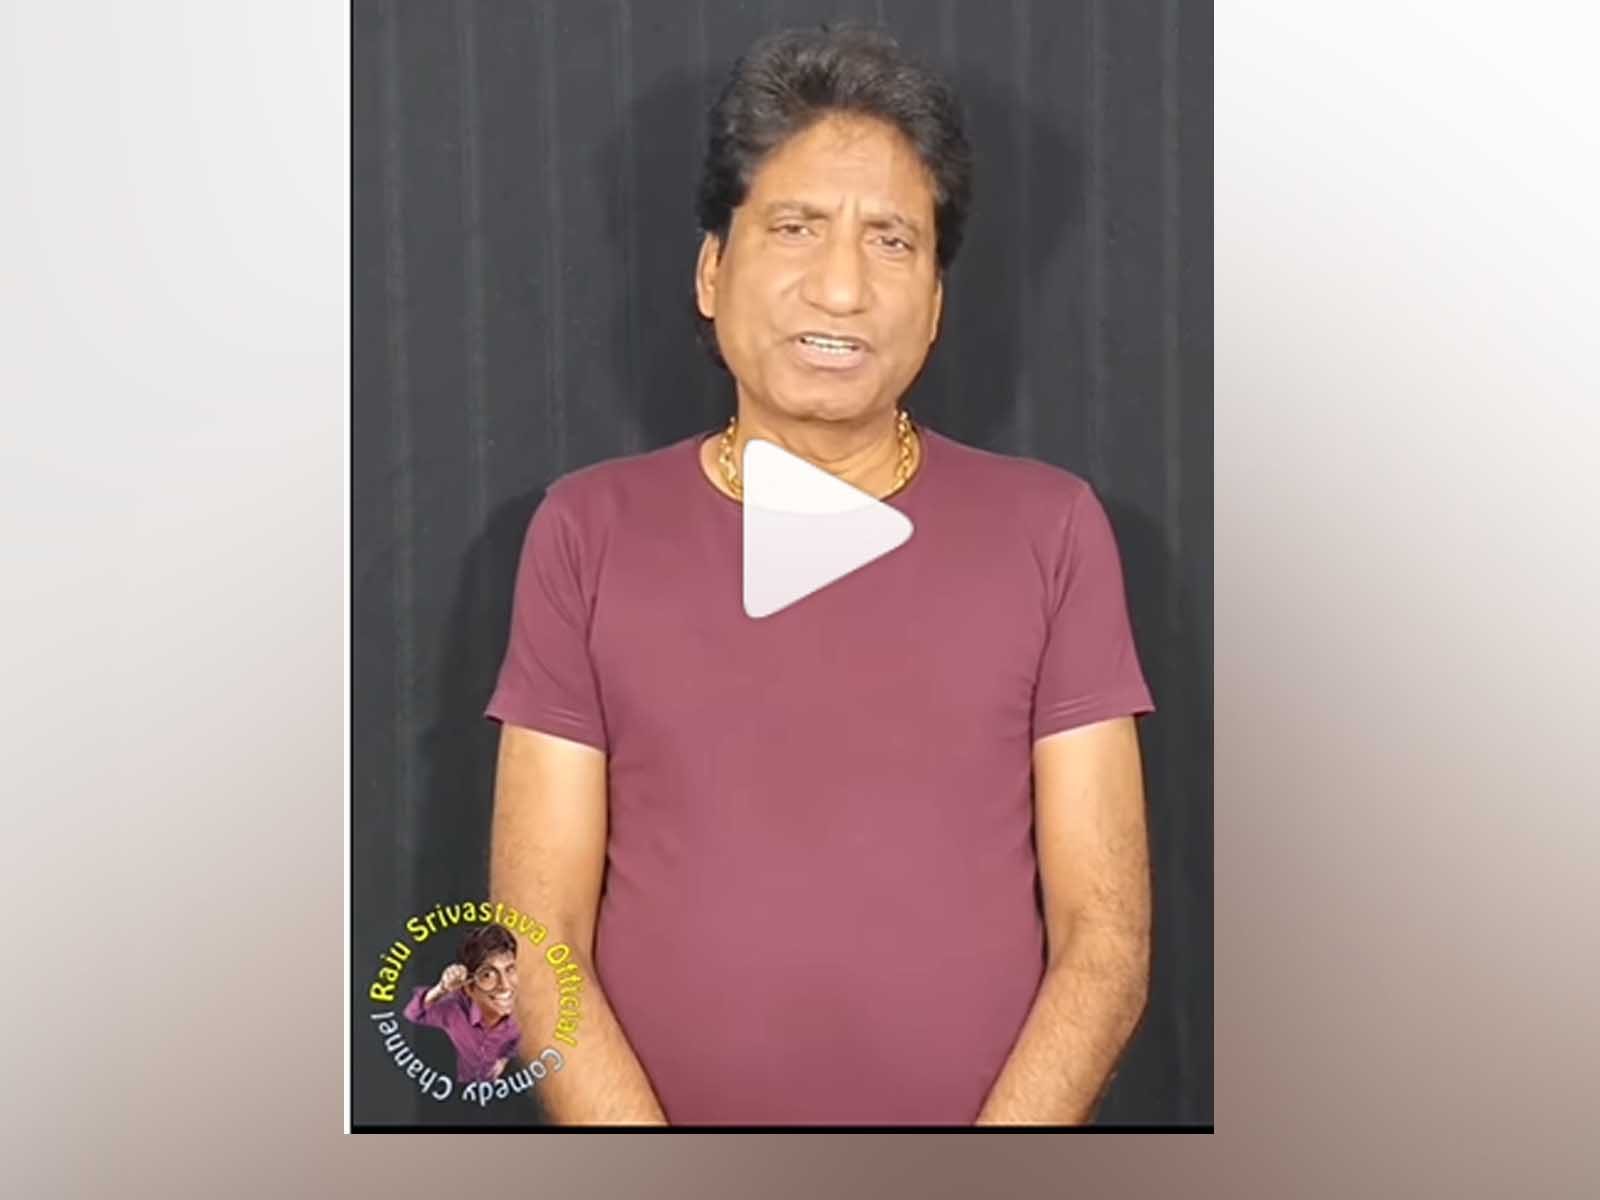 Raju Srivastava: ਰਾਜੂ ਸ਼੍ਰੀਵਾਸਤਵ ਨੇ ਆਖਰੀ ਪੋਸਟ 'ਚ ਕਹੀ ਸੀ ਇਹ ਗੱਲ, ਦੇਖੋ Video
